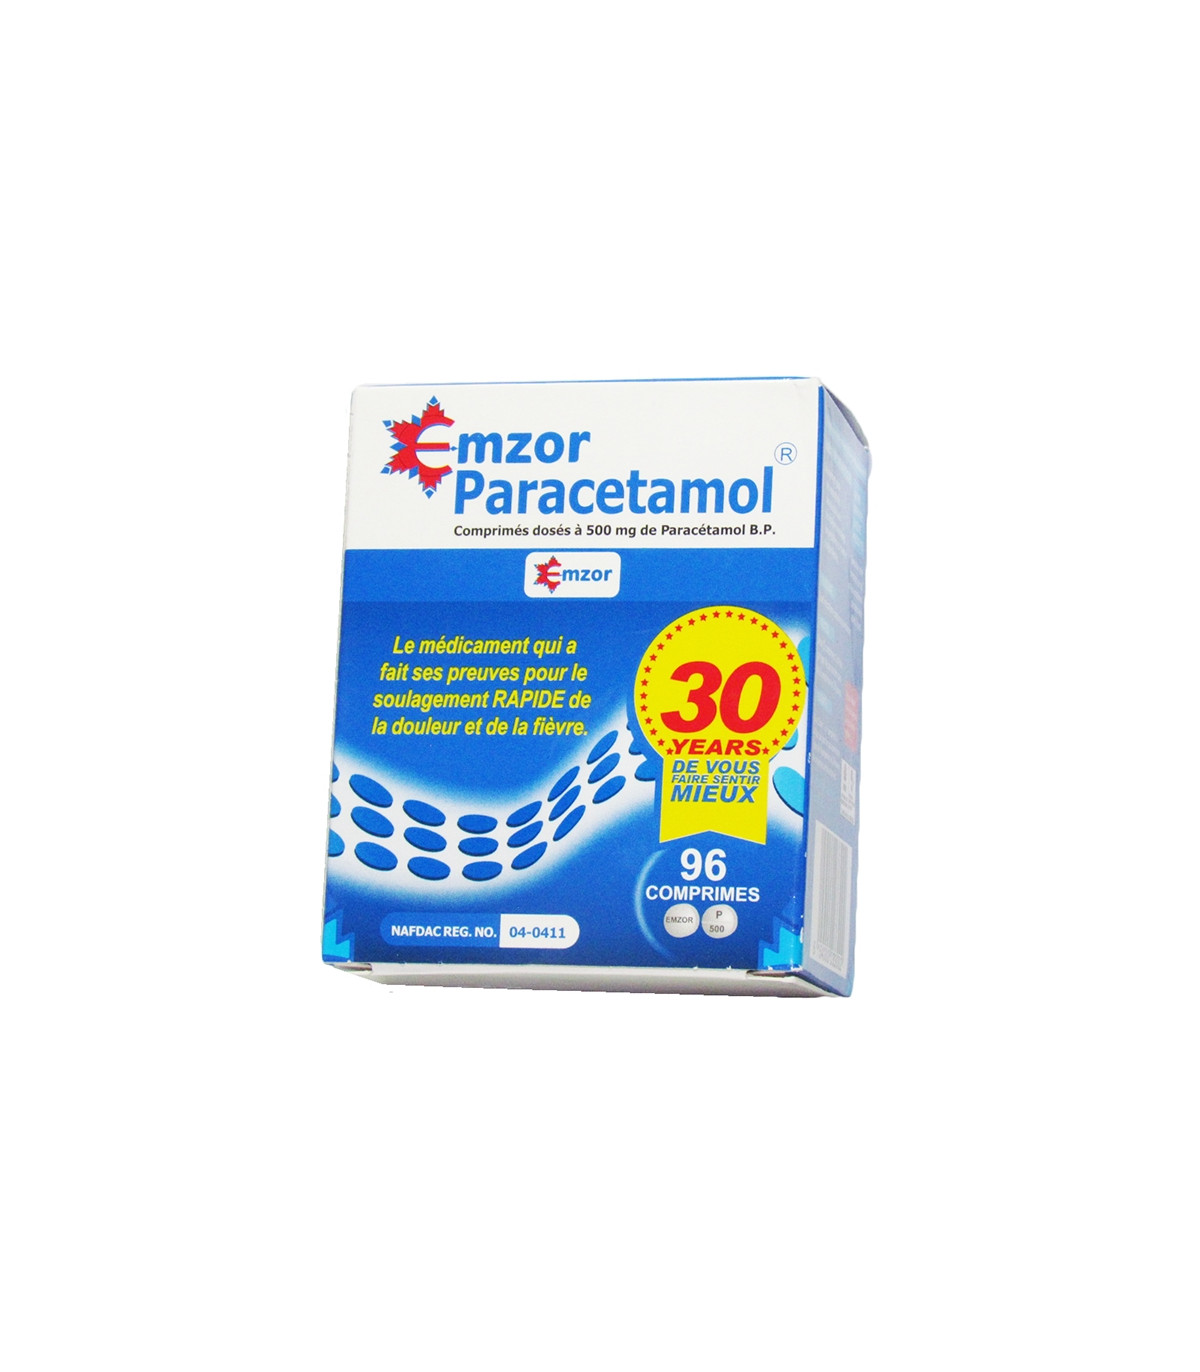 Emzor Paracetamol Tablets